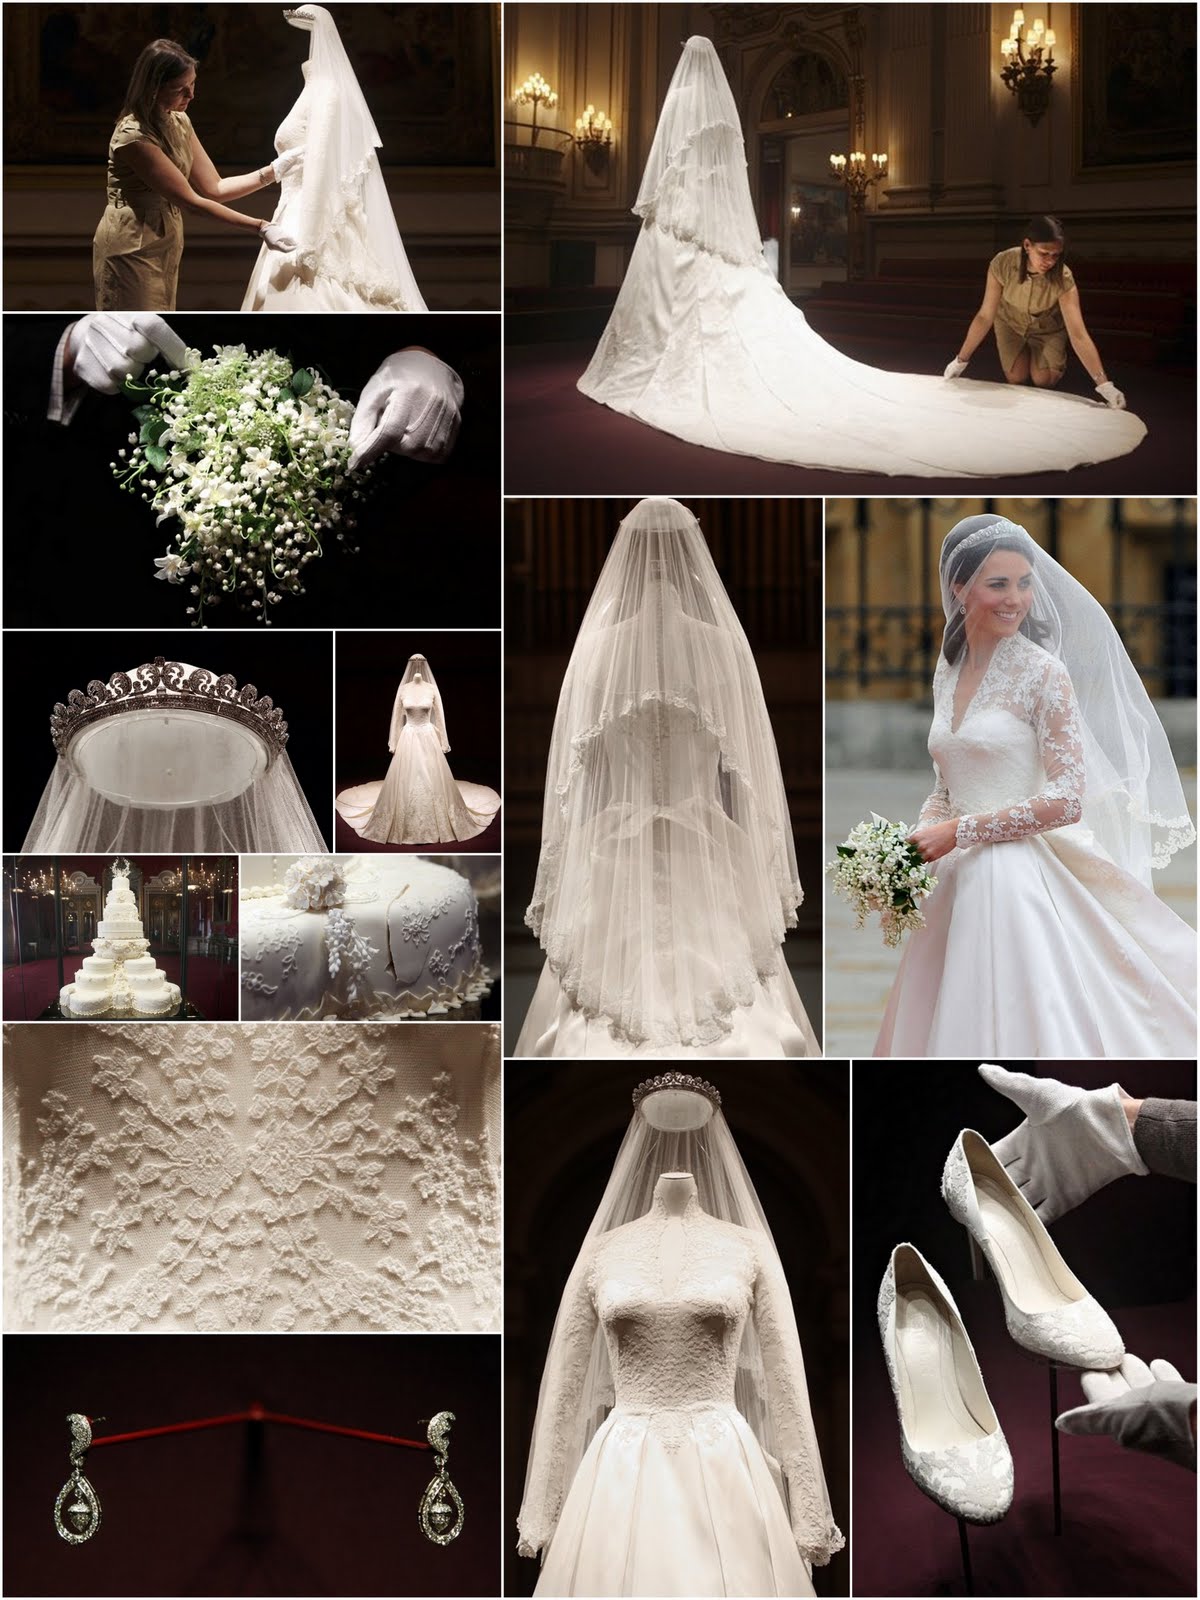 Kate Middleton Wedding Dress Goes On Display At Buckingham Palace | My ...